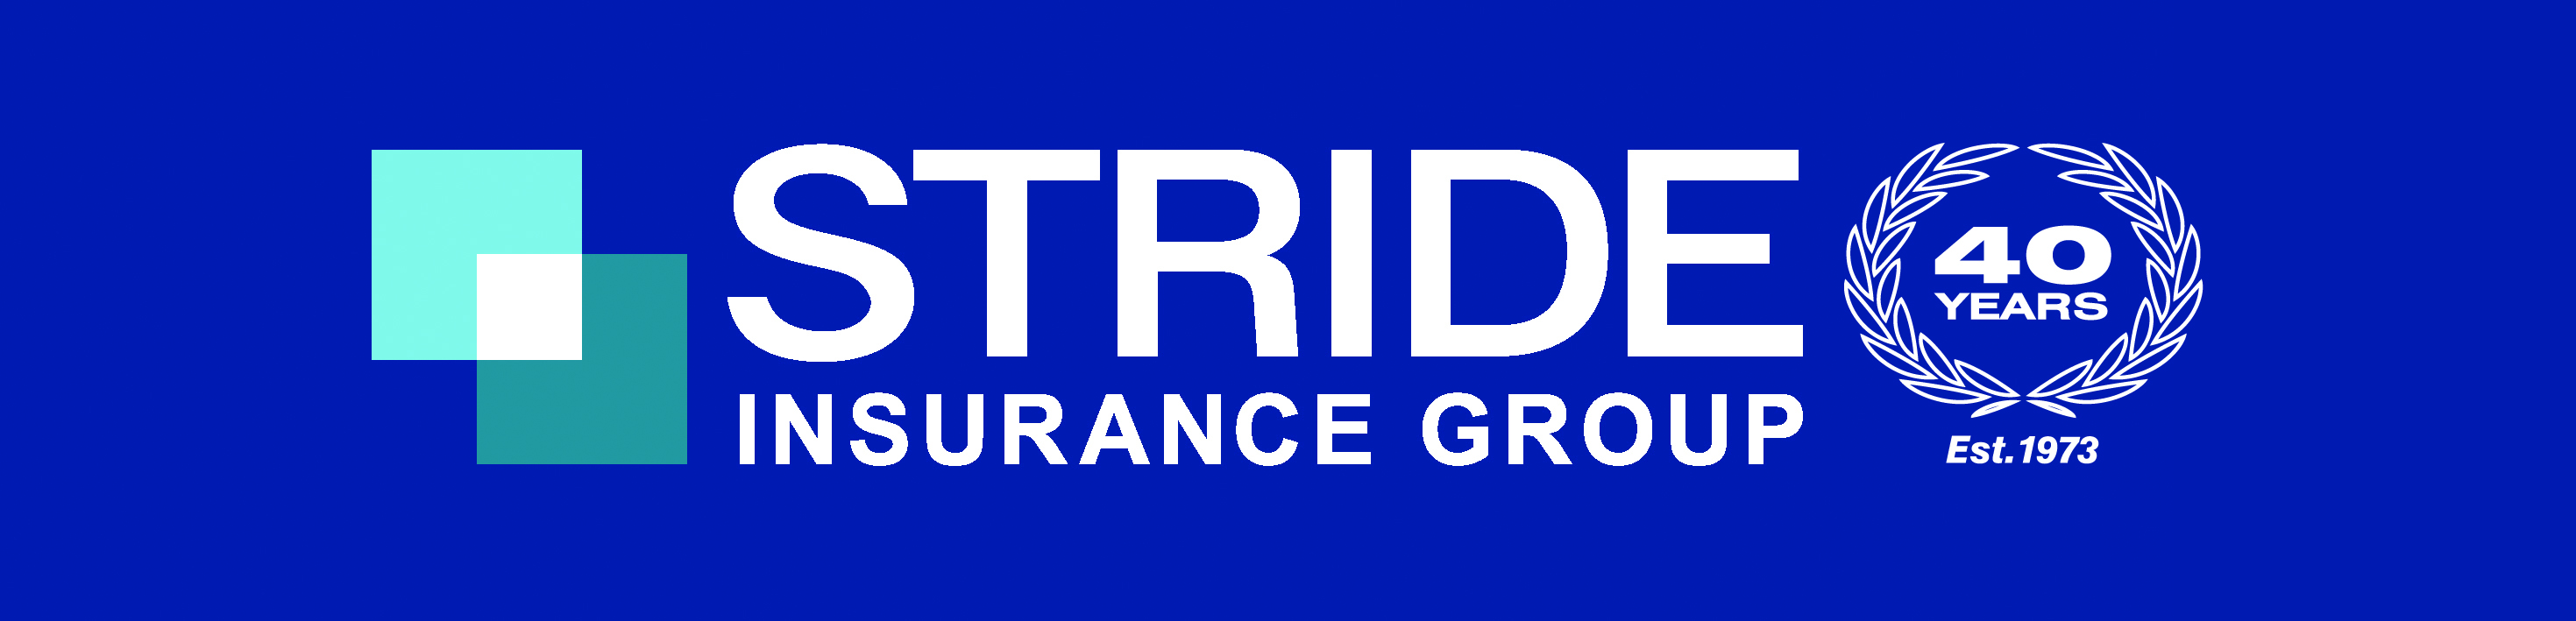 Stride Group logo - 40th Anniversary